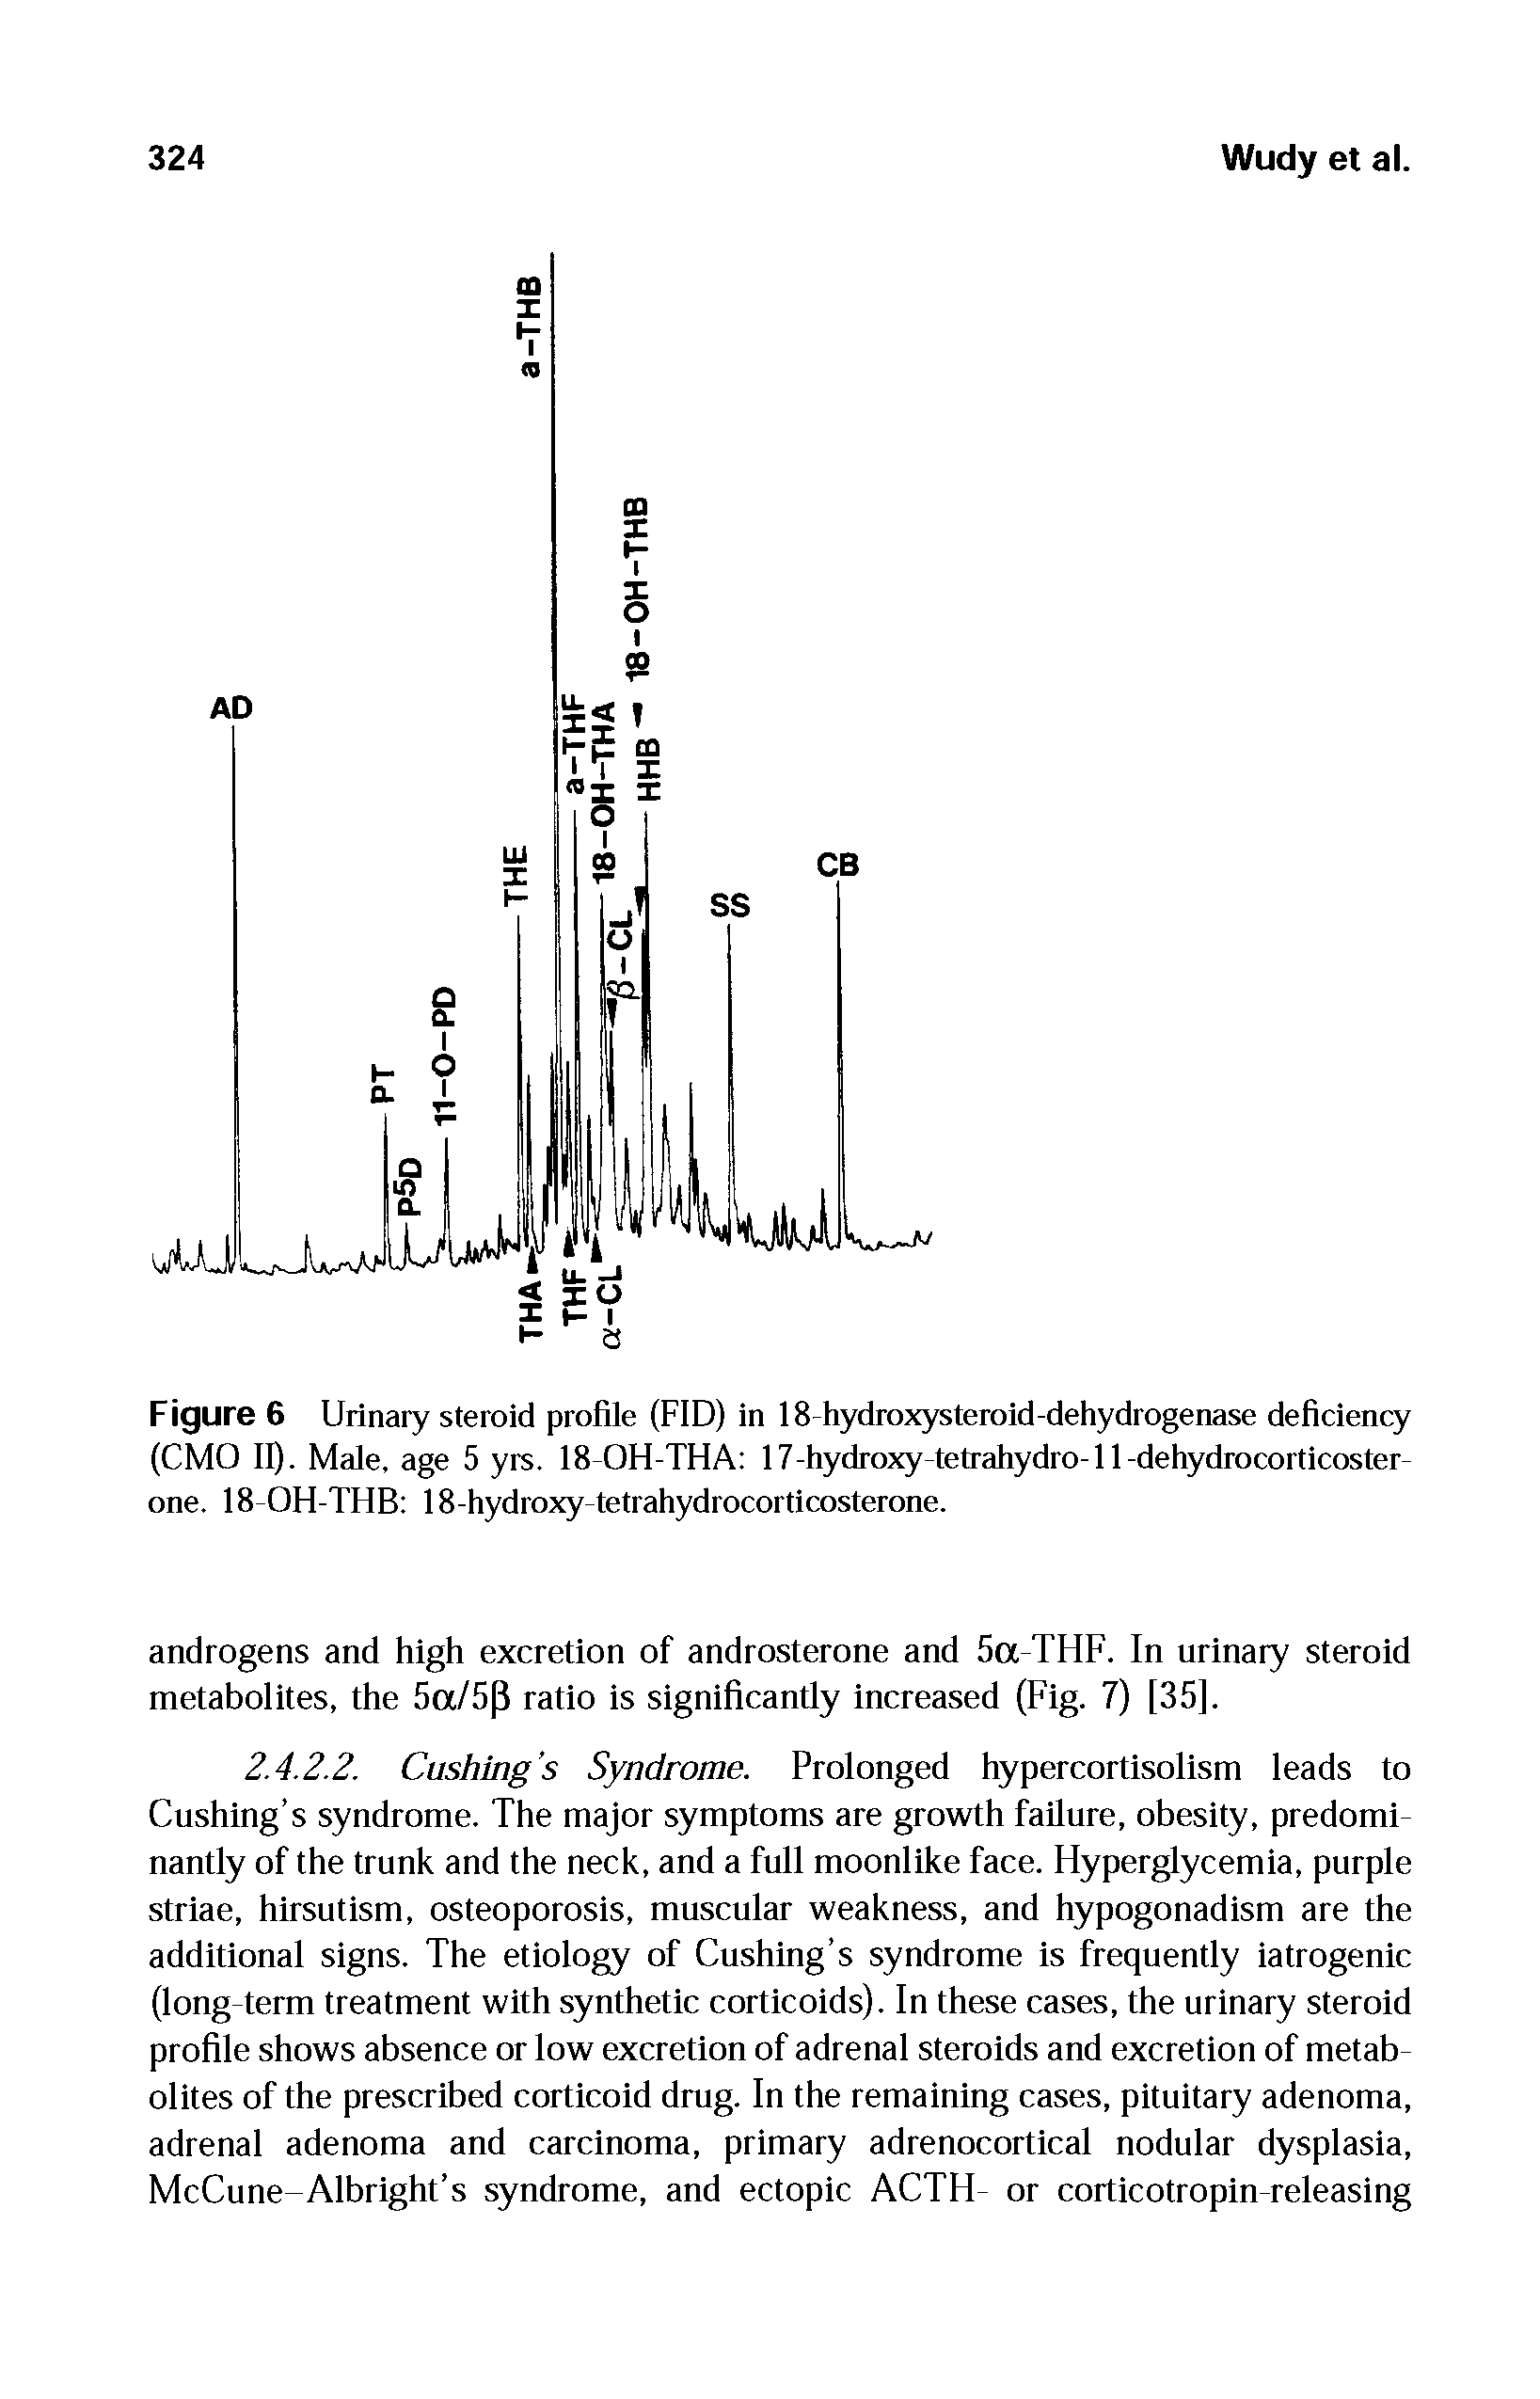 Figure 6 Urinary steroid profile (FID) in 18-hydroxysteroid-dehydrogenase deficiency (CMO II). Male, age 5 yrs. 18-OH-THA 17-hydroxy tetrahydro-11-dehydrocorticosterone. 18 OH-THB 18-hydroxy-tetrahydrocorticosterone.